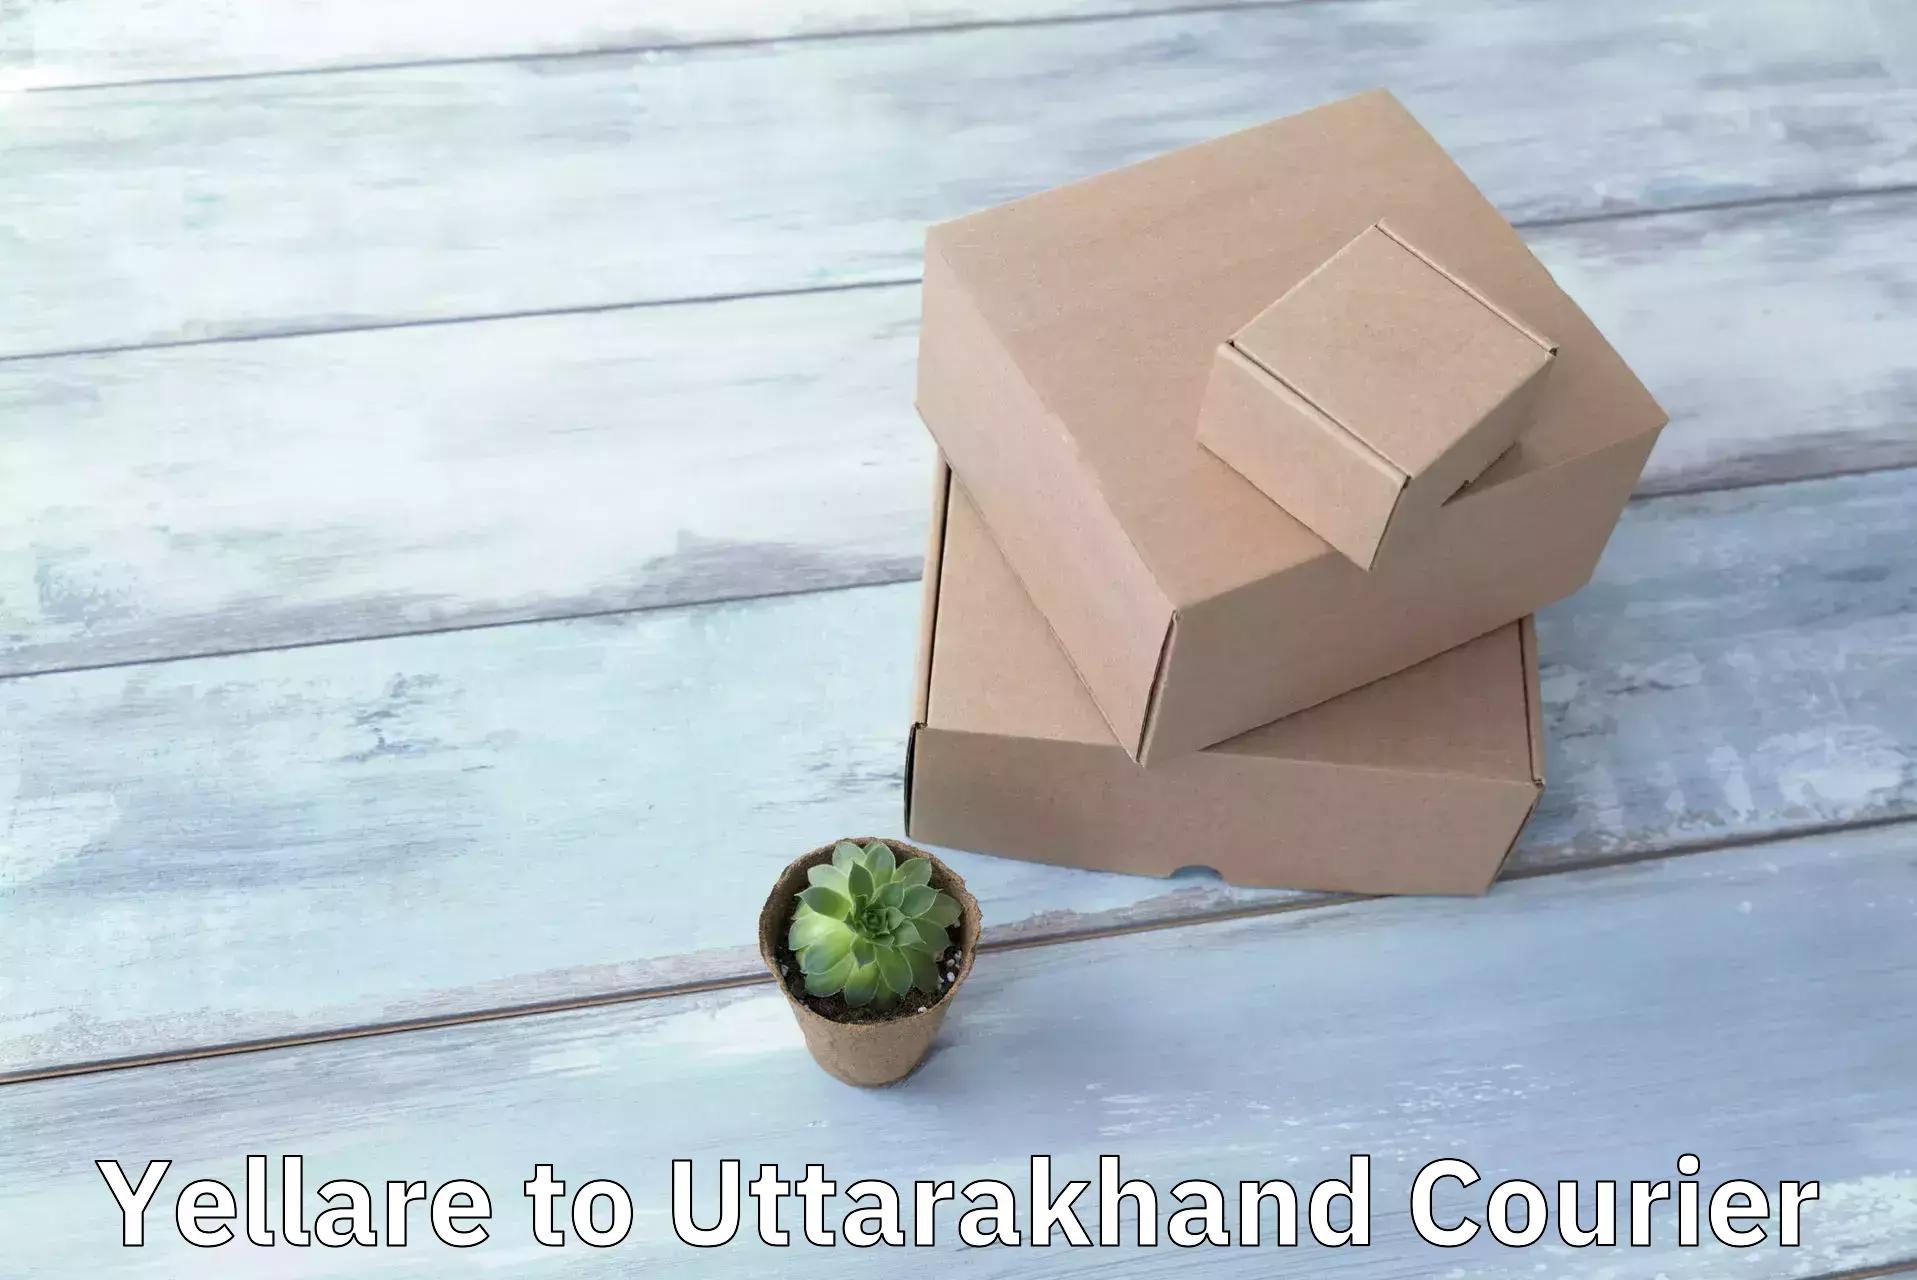 Ocean freight courier Yellare to Uttarakhand